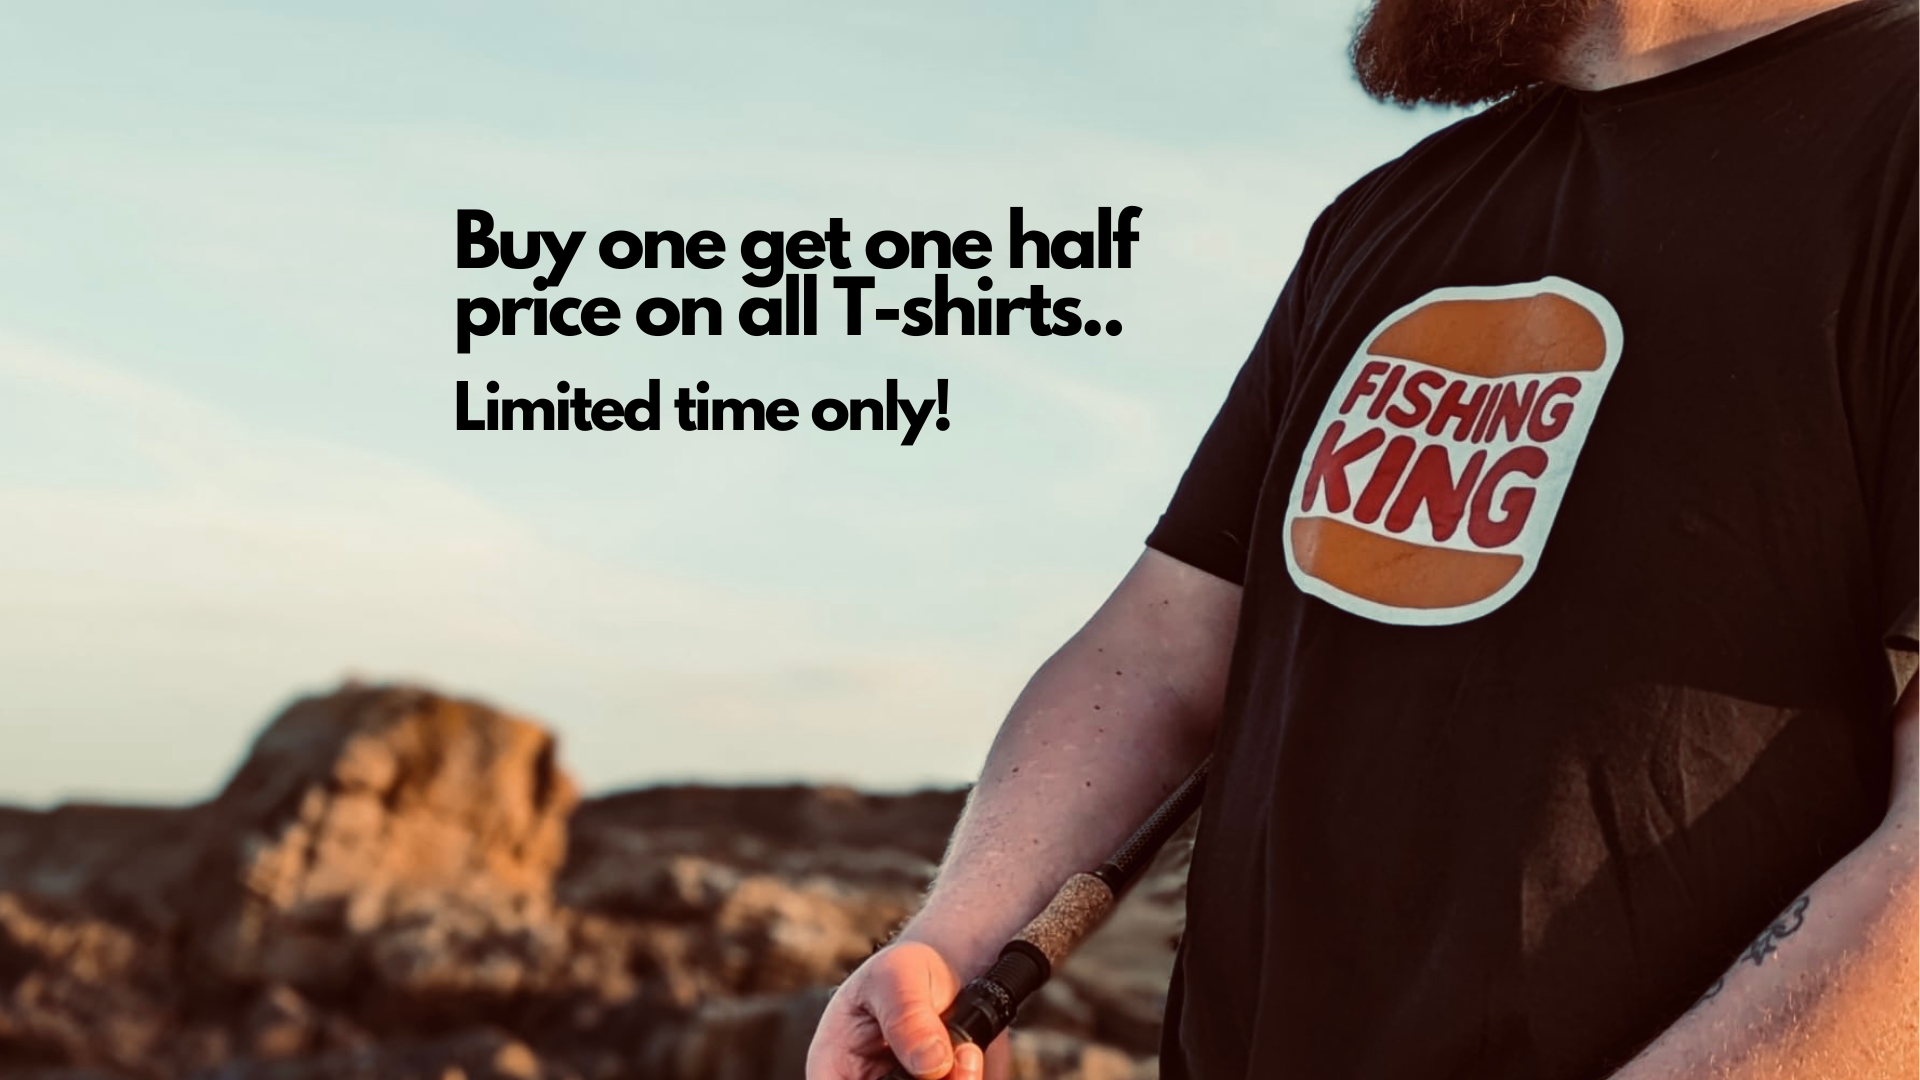 Fisherfash a fishing store for fishermen t-shirts and hoodies